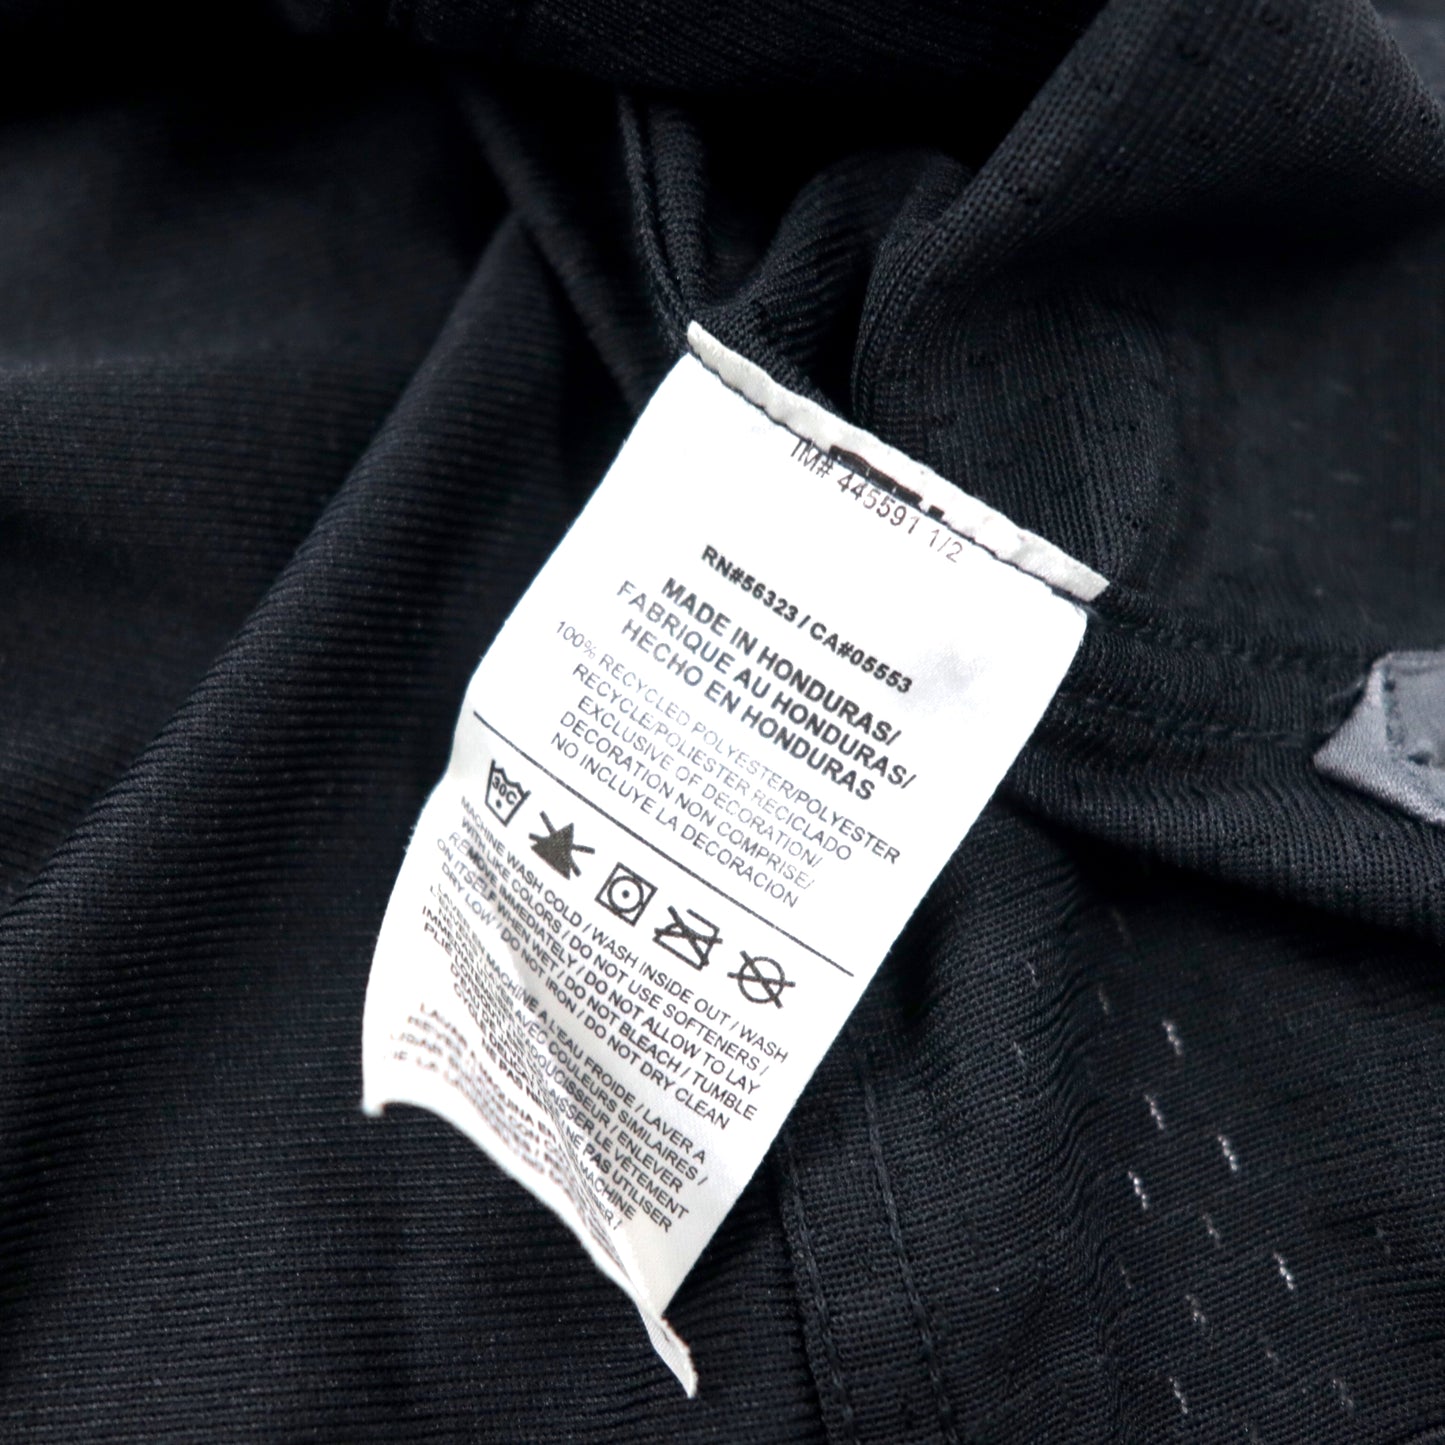 NIKE NFL ゲームシャツ XL ブラック ポリエステル LYNCH ナンバリング ビッグサイズ